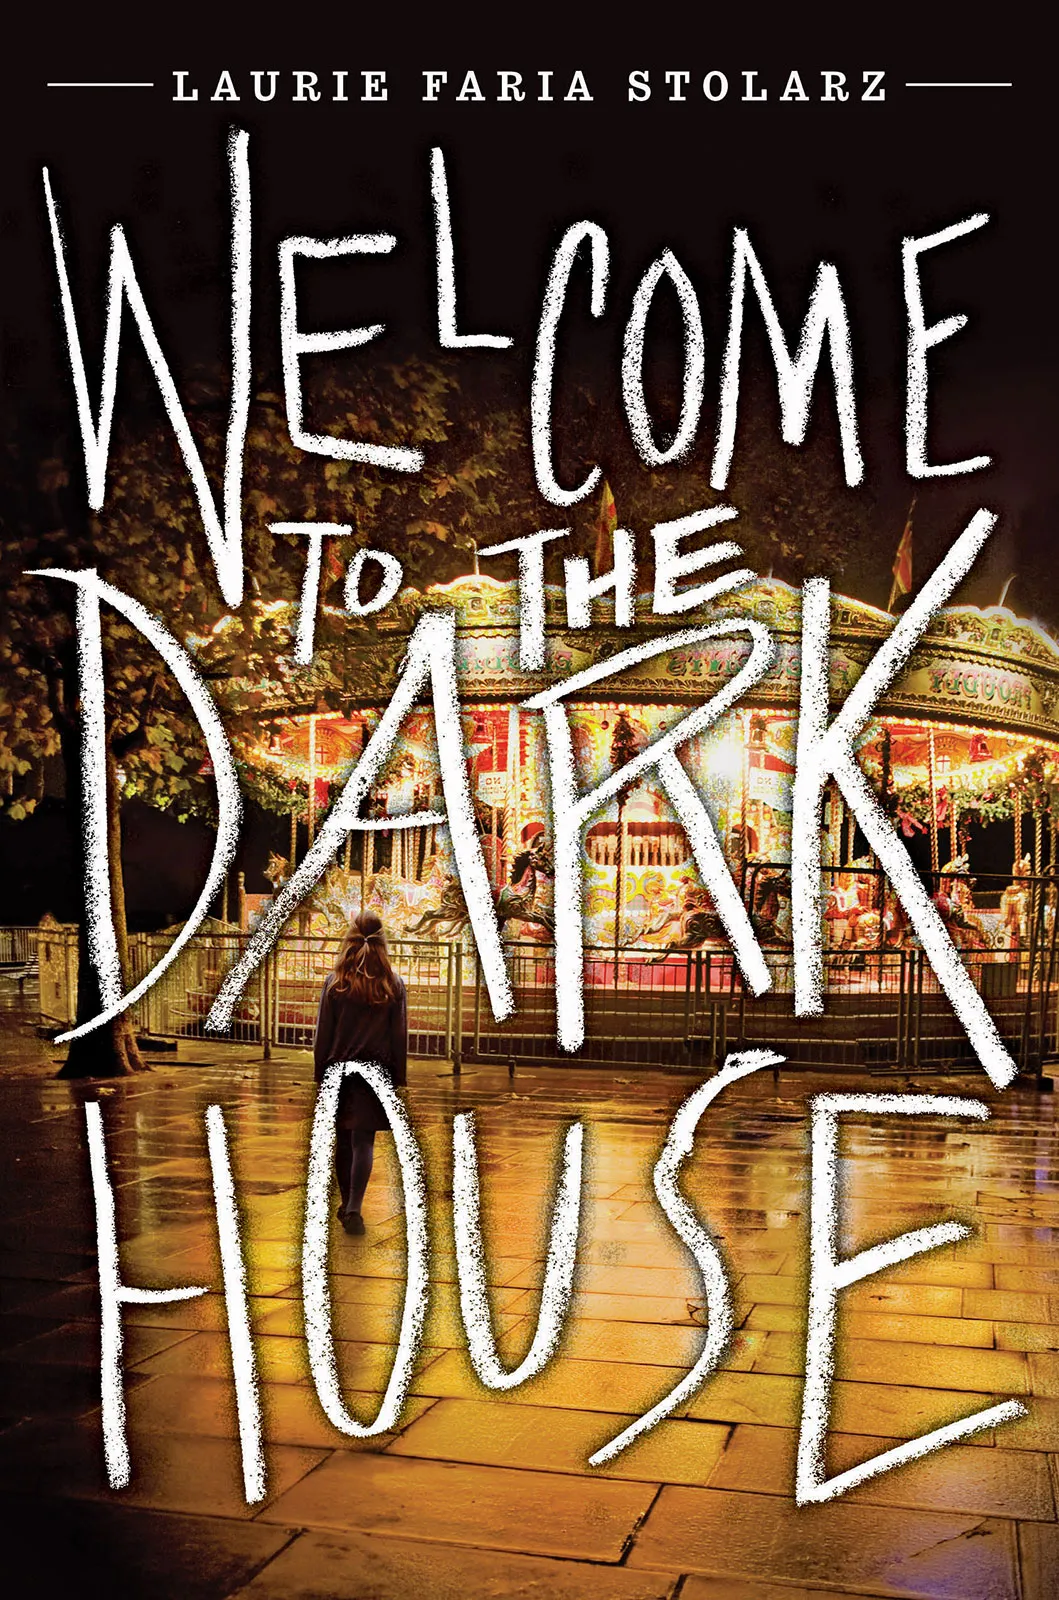 Welcome to the Dark House (Dark House #1)